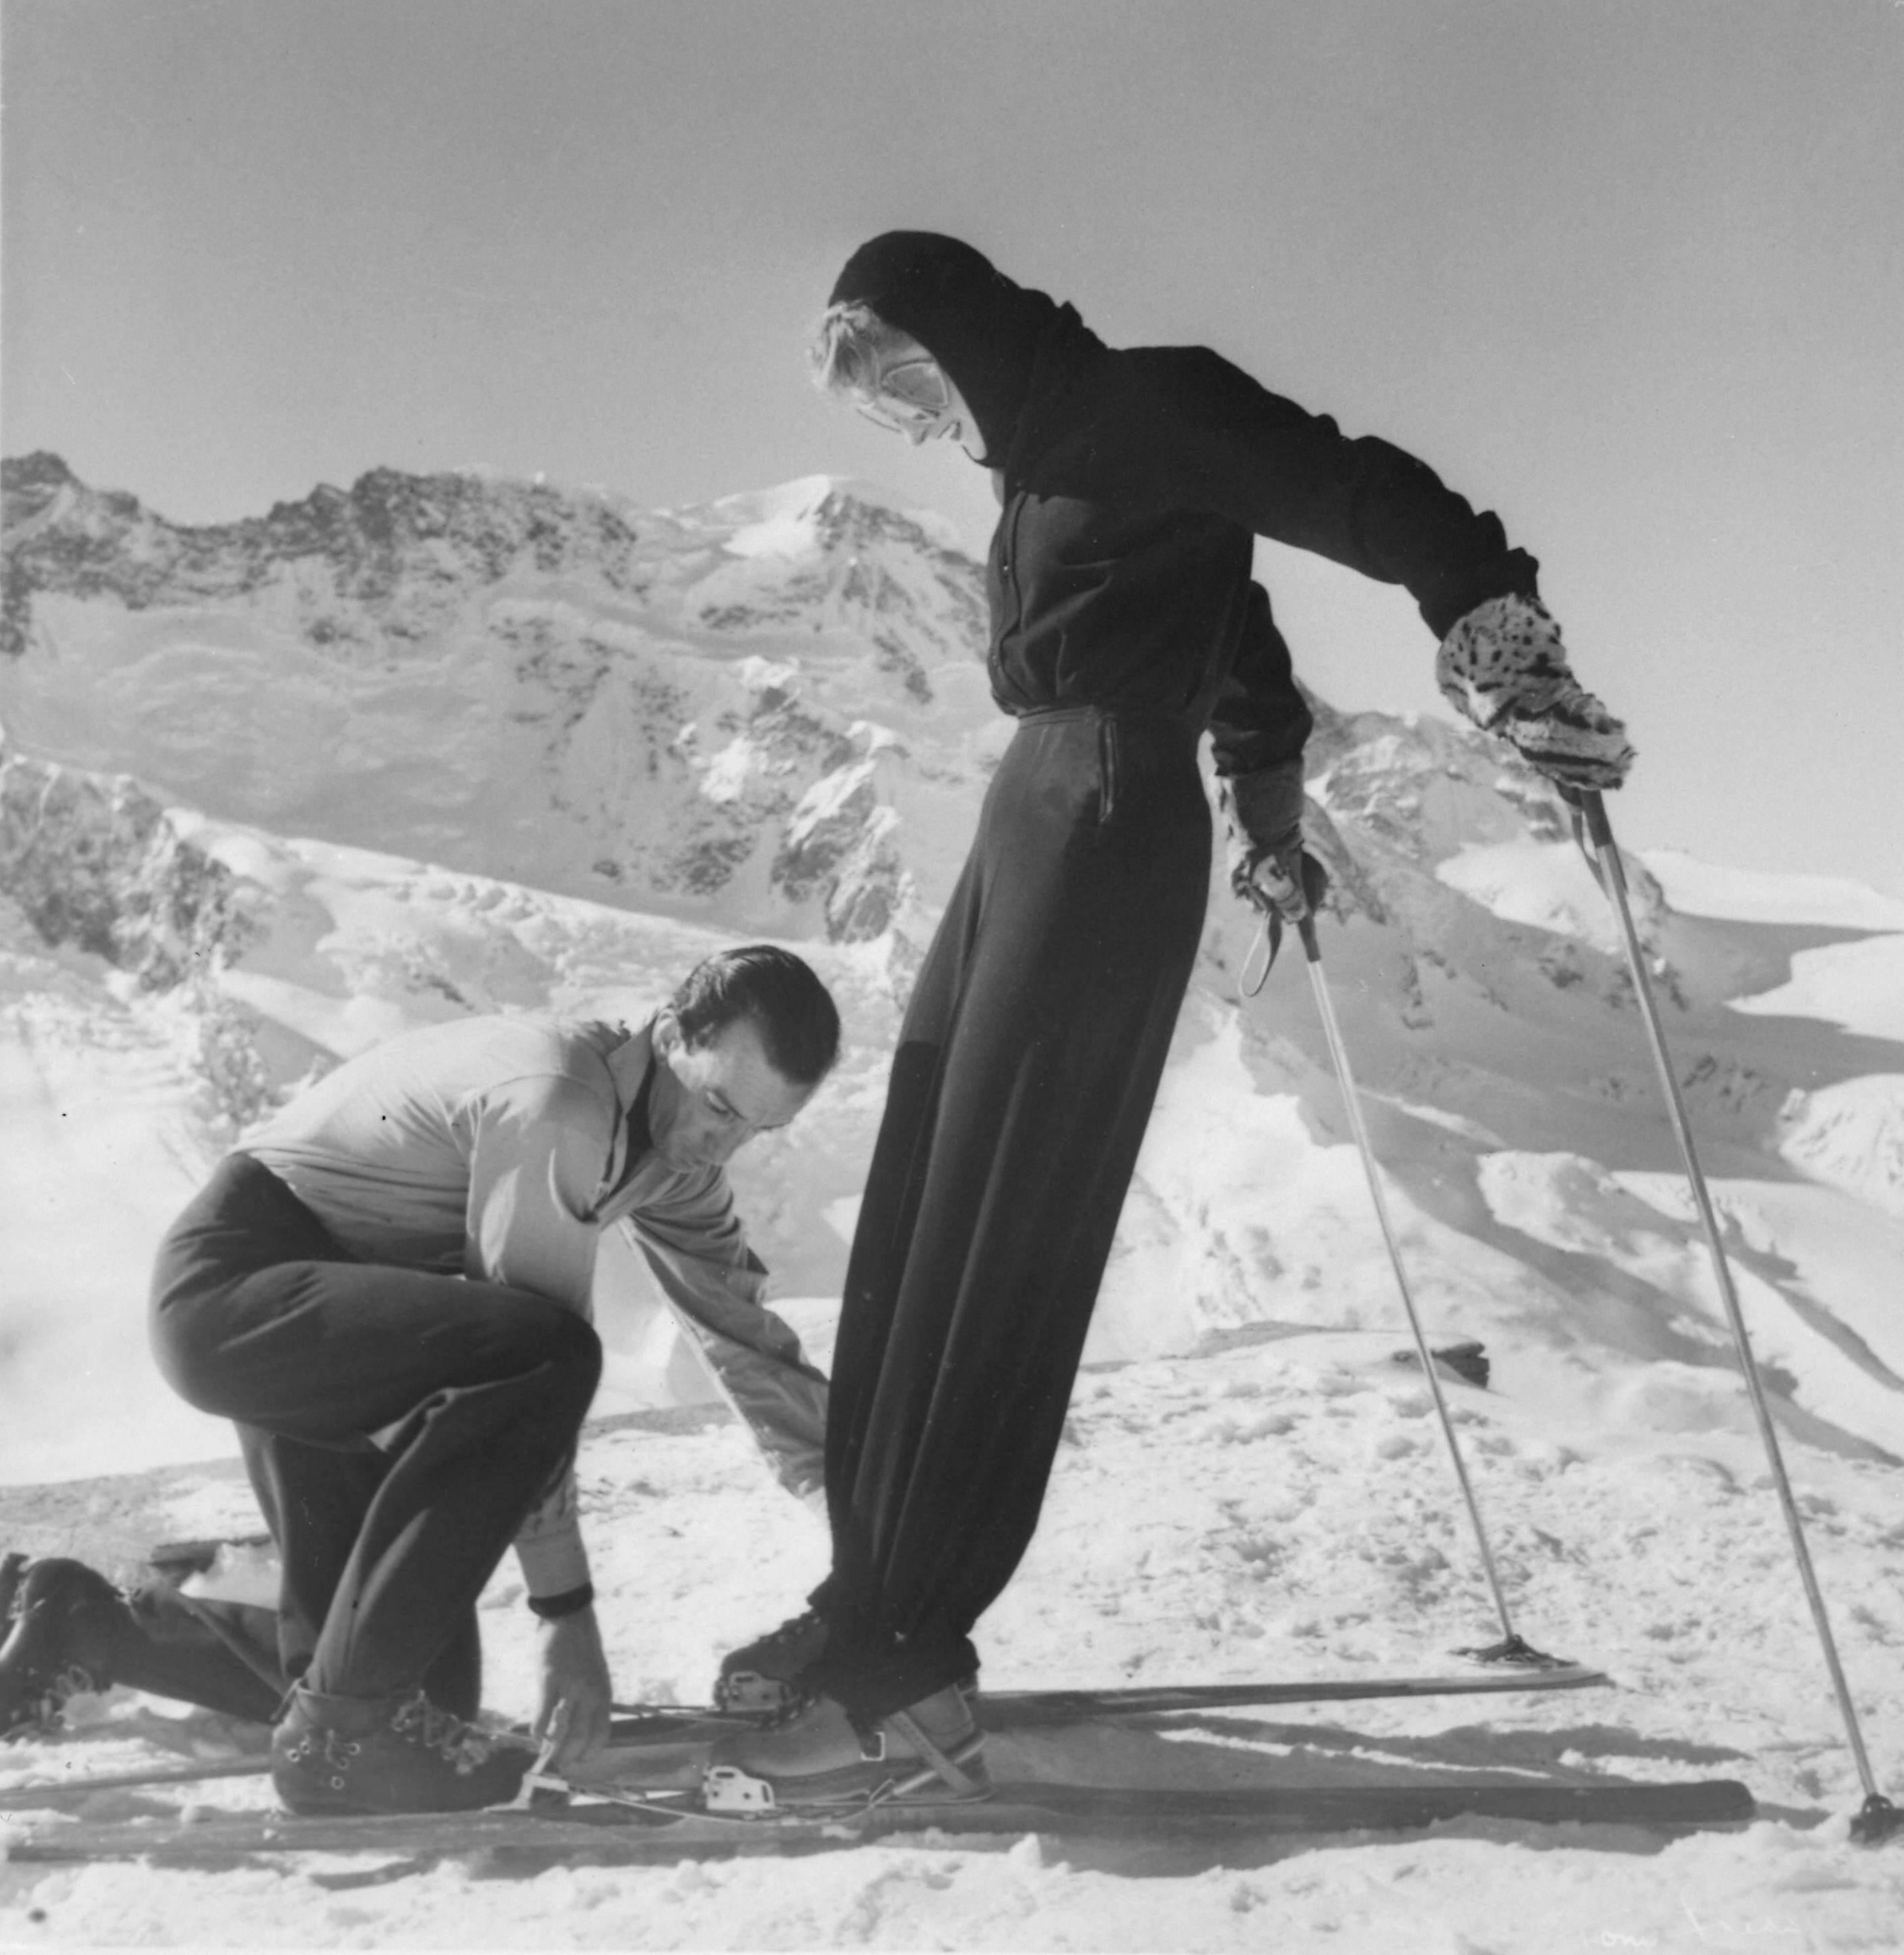 Marquis Emilio Pucci fastens a ski for Mrs Poppi de Salis, who wears a Pucci ski outfit; Zermatt, 1947. Harper’s Bazaar, December 1948. © Emilio Pucci